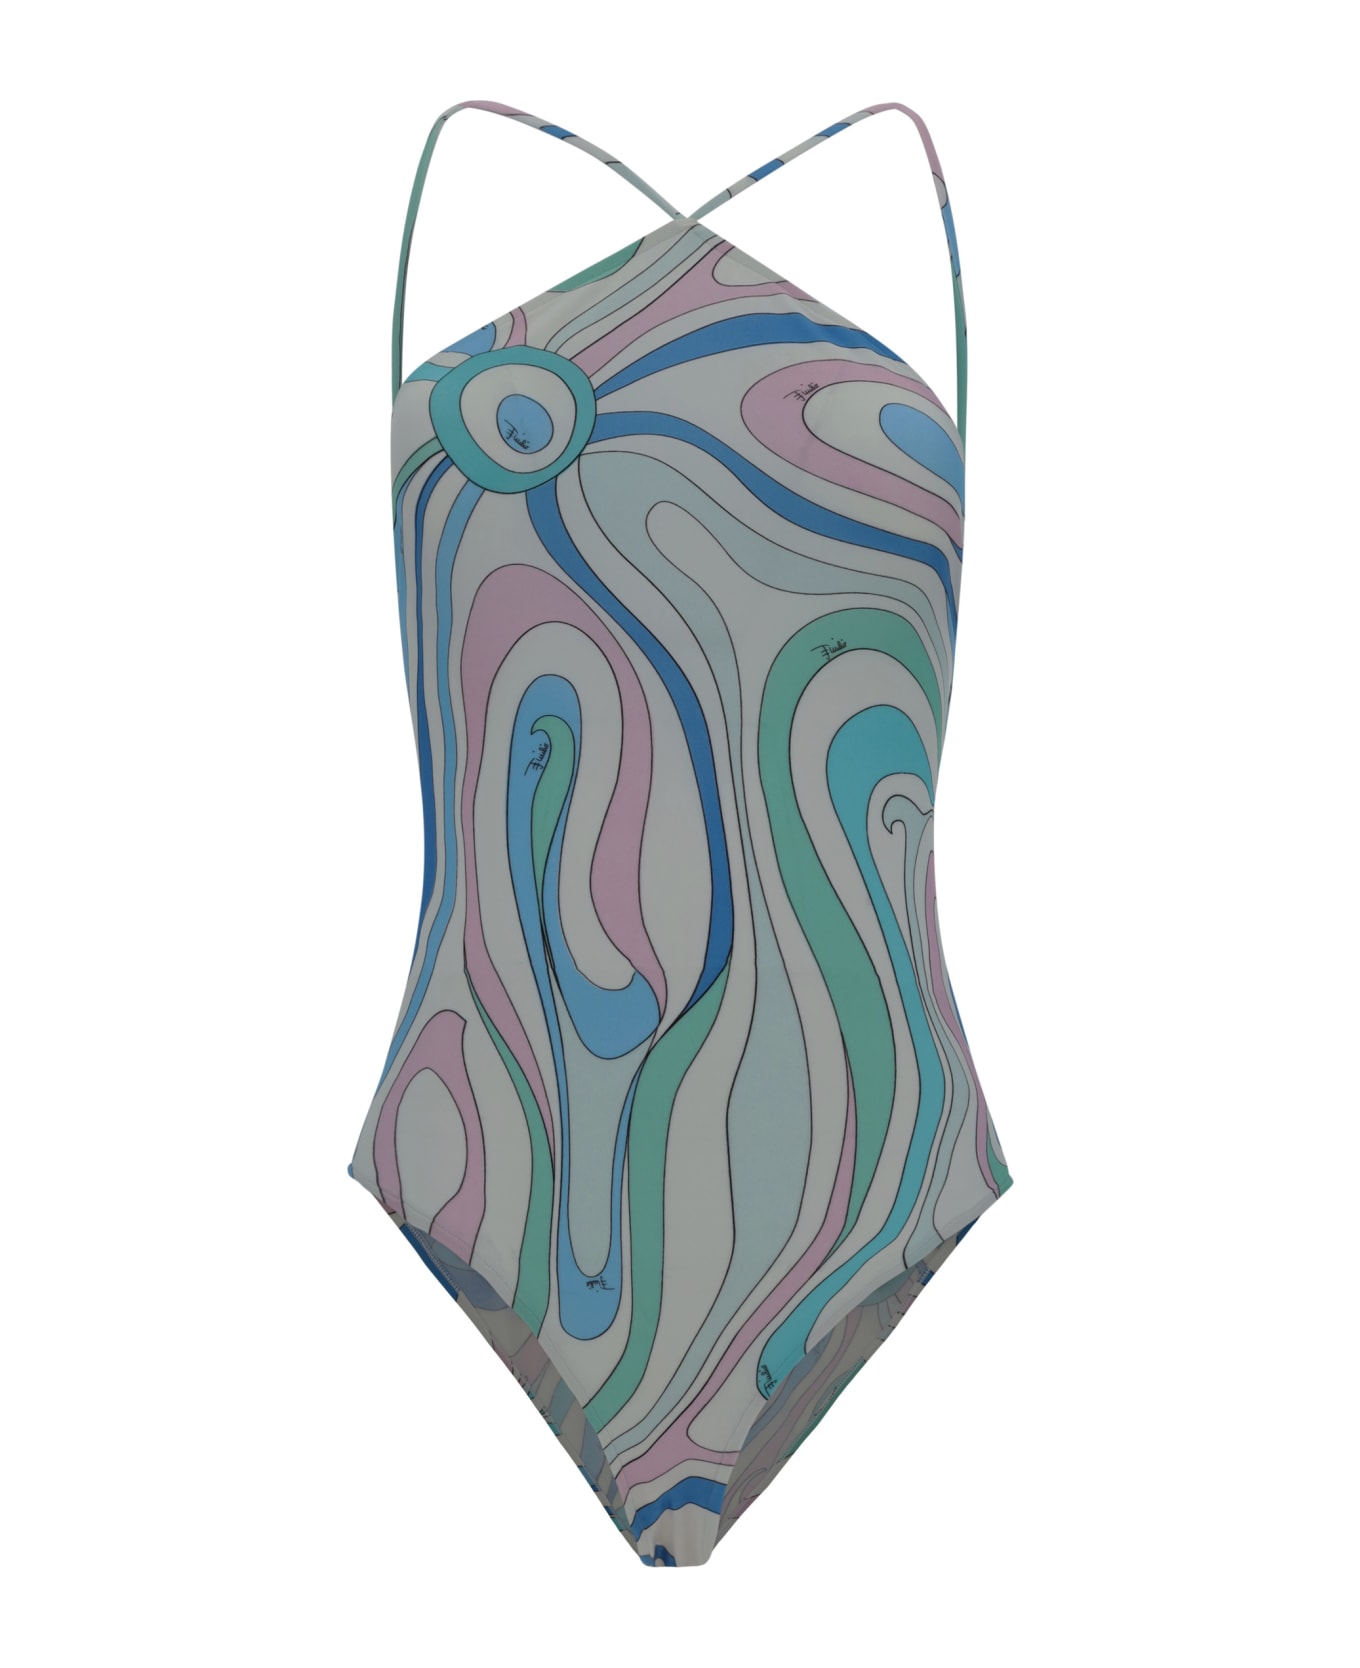 Pucci Vivara Swimsuit - 051 水着